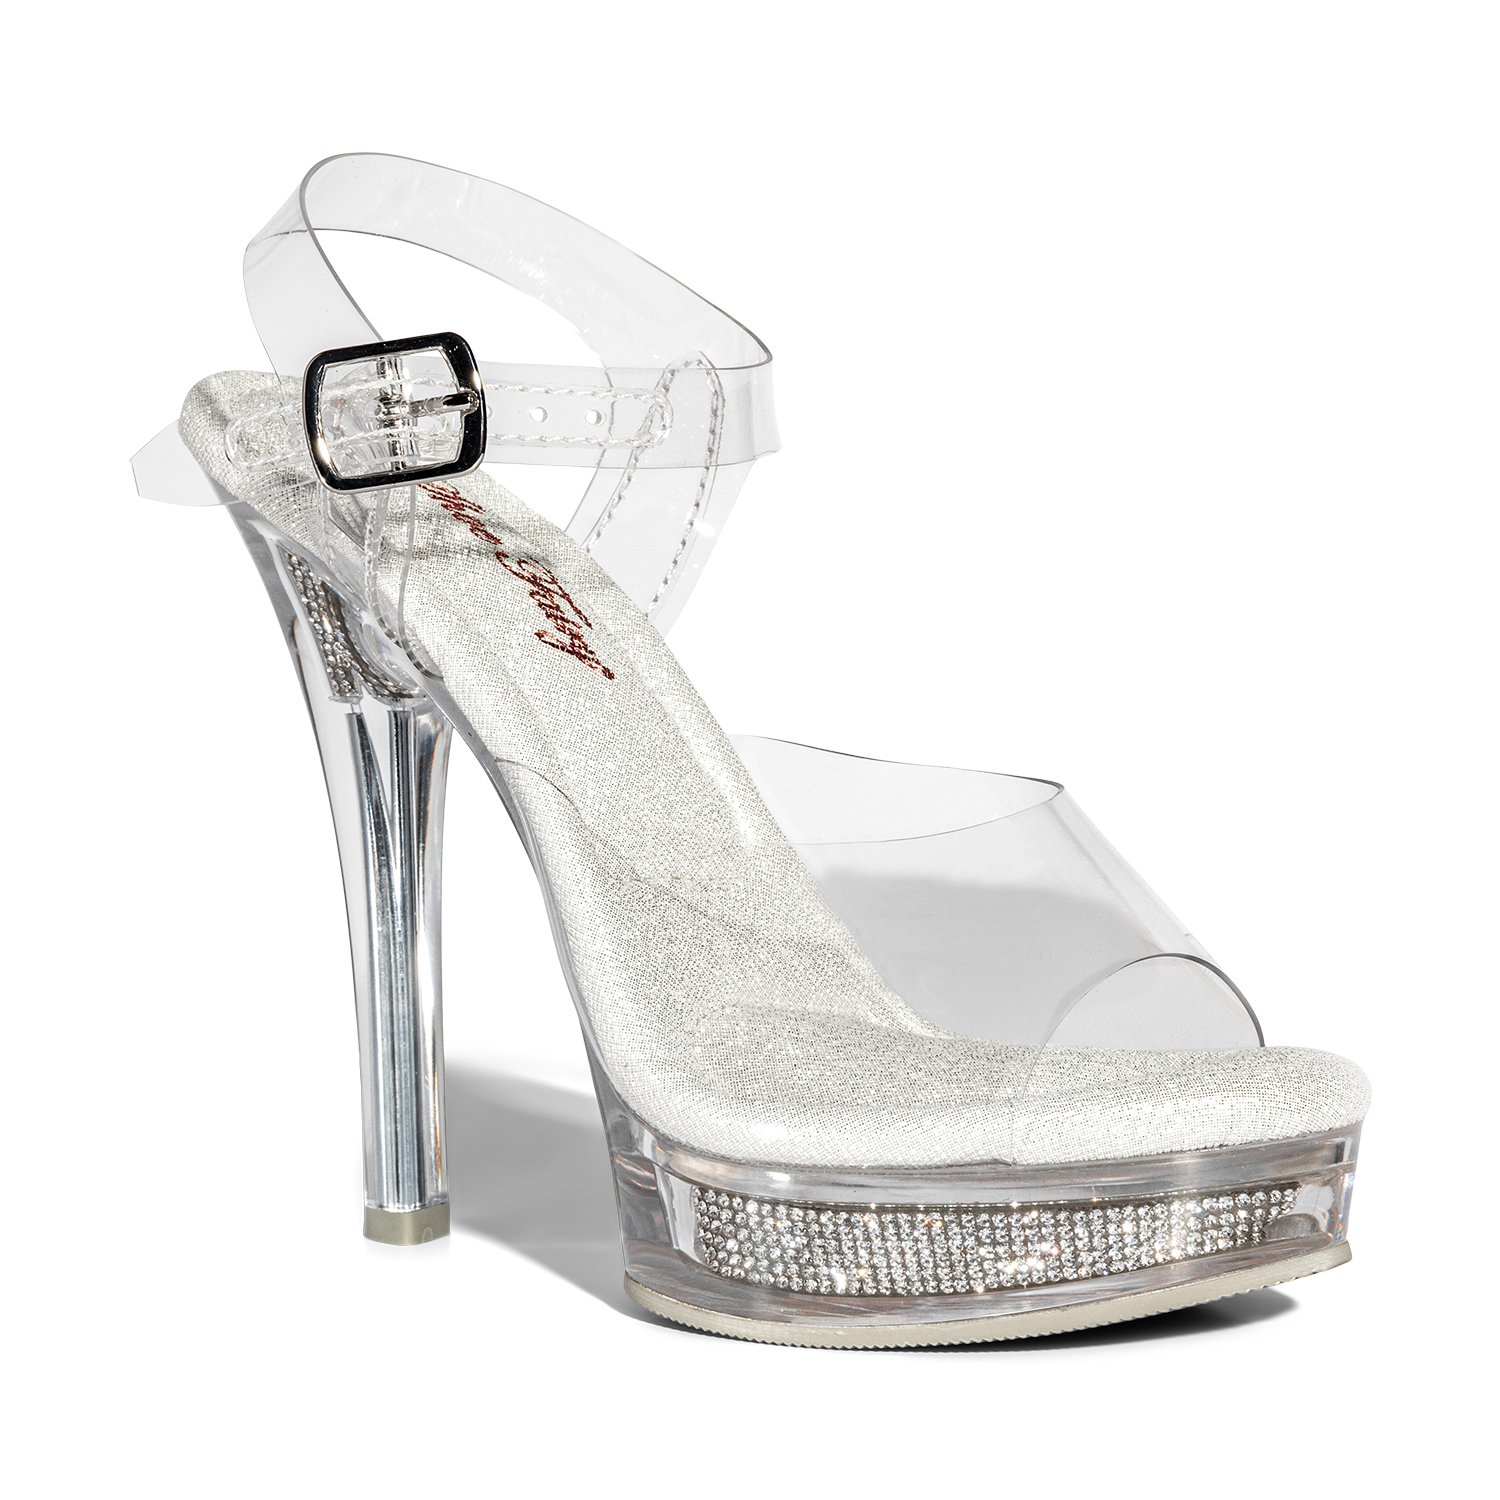 Ellie Shoes IS-E-M-Vanity 5 inch Heel Clear Mule, Size 9, Clear | eBay